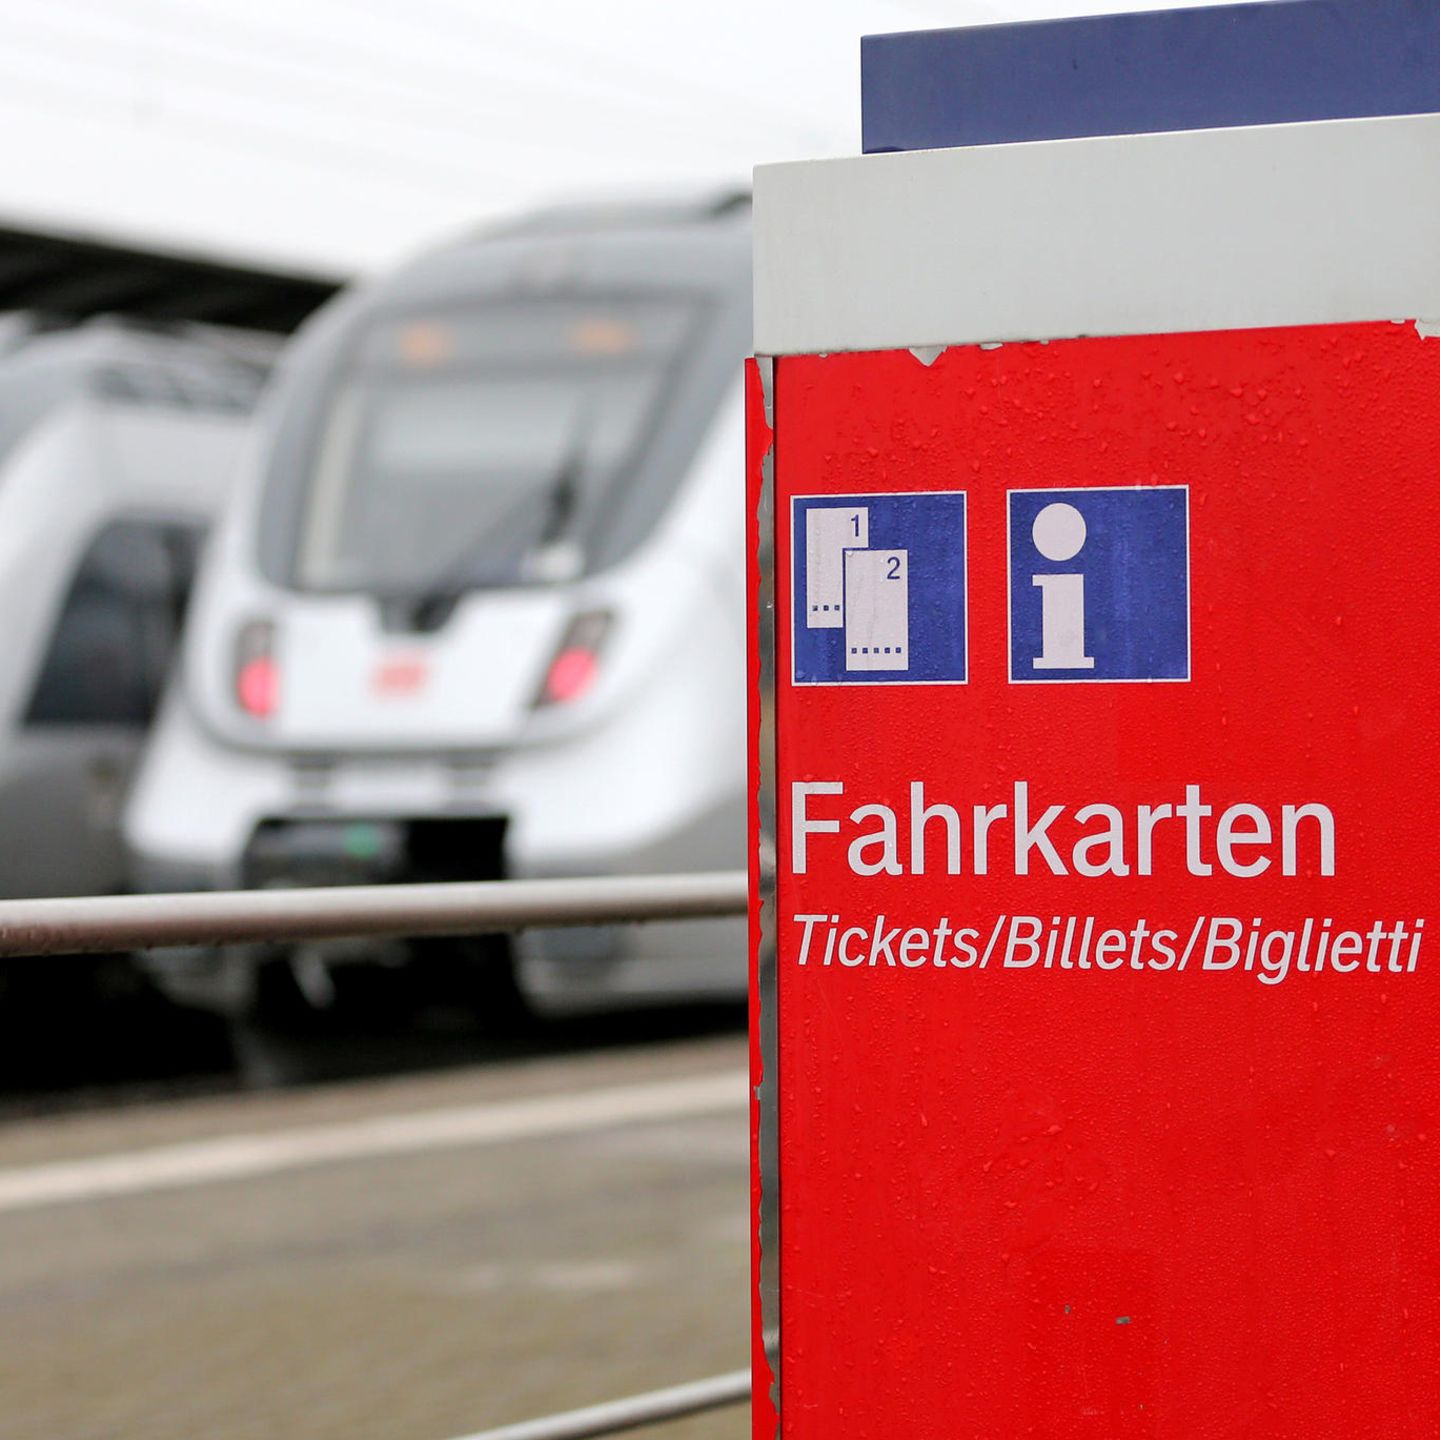 Tickets kaufen. Fahrkarten. Рюкзак Deutsche Bahn. Реклама Deutsche Bahn. Fahrkarte.